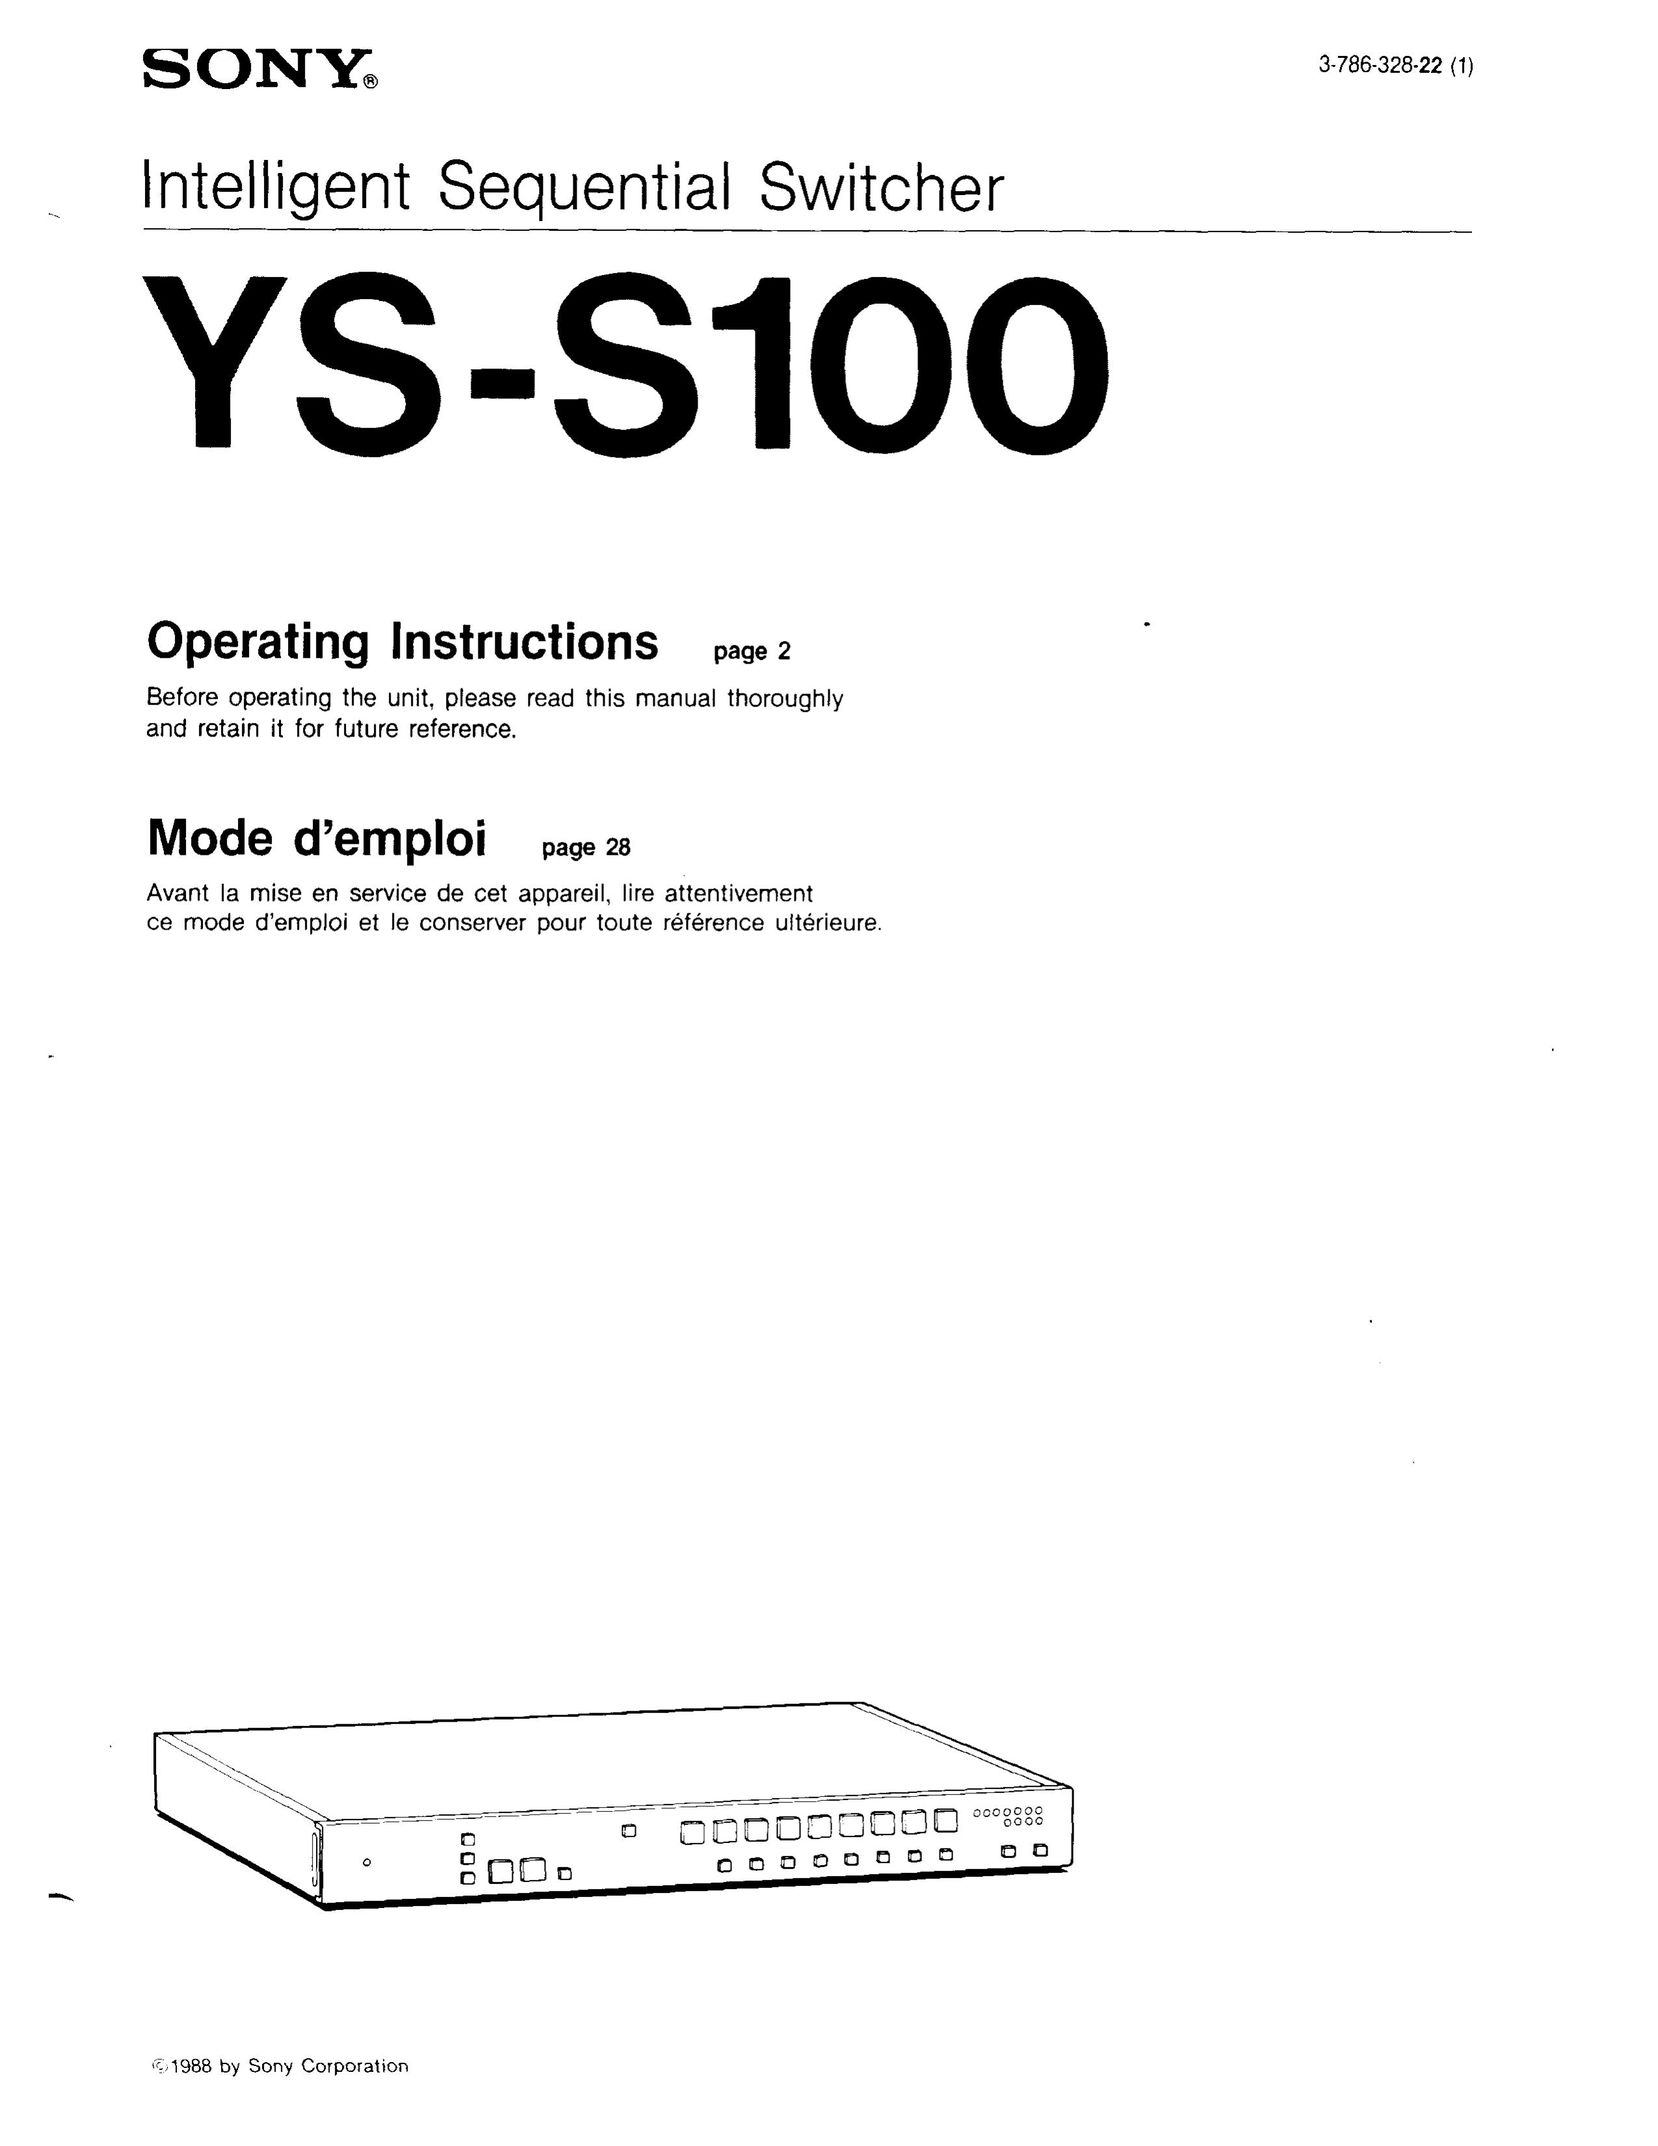 Sony YS-S100 Plumbing Product User Manual